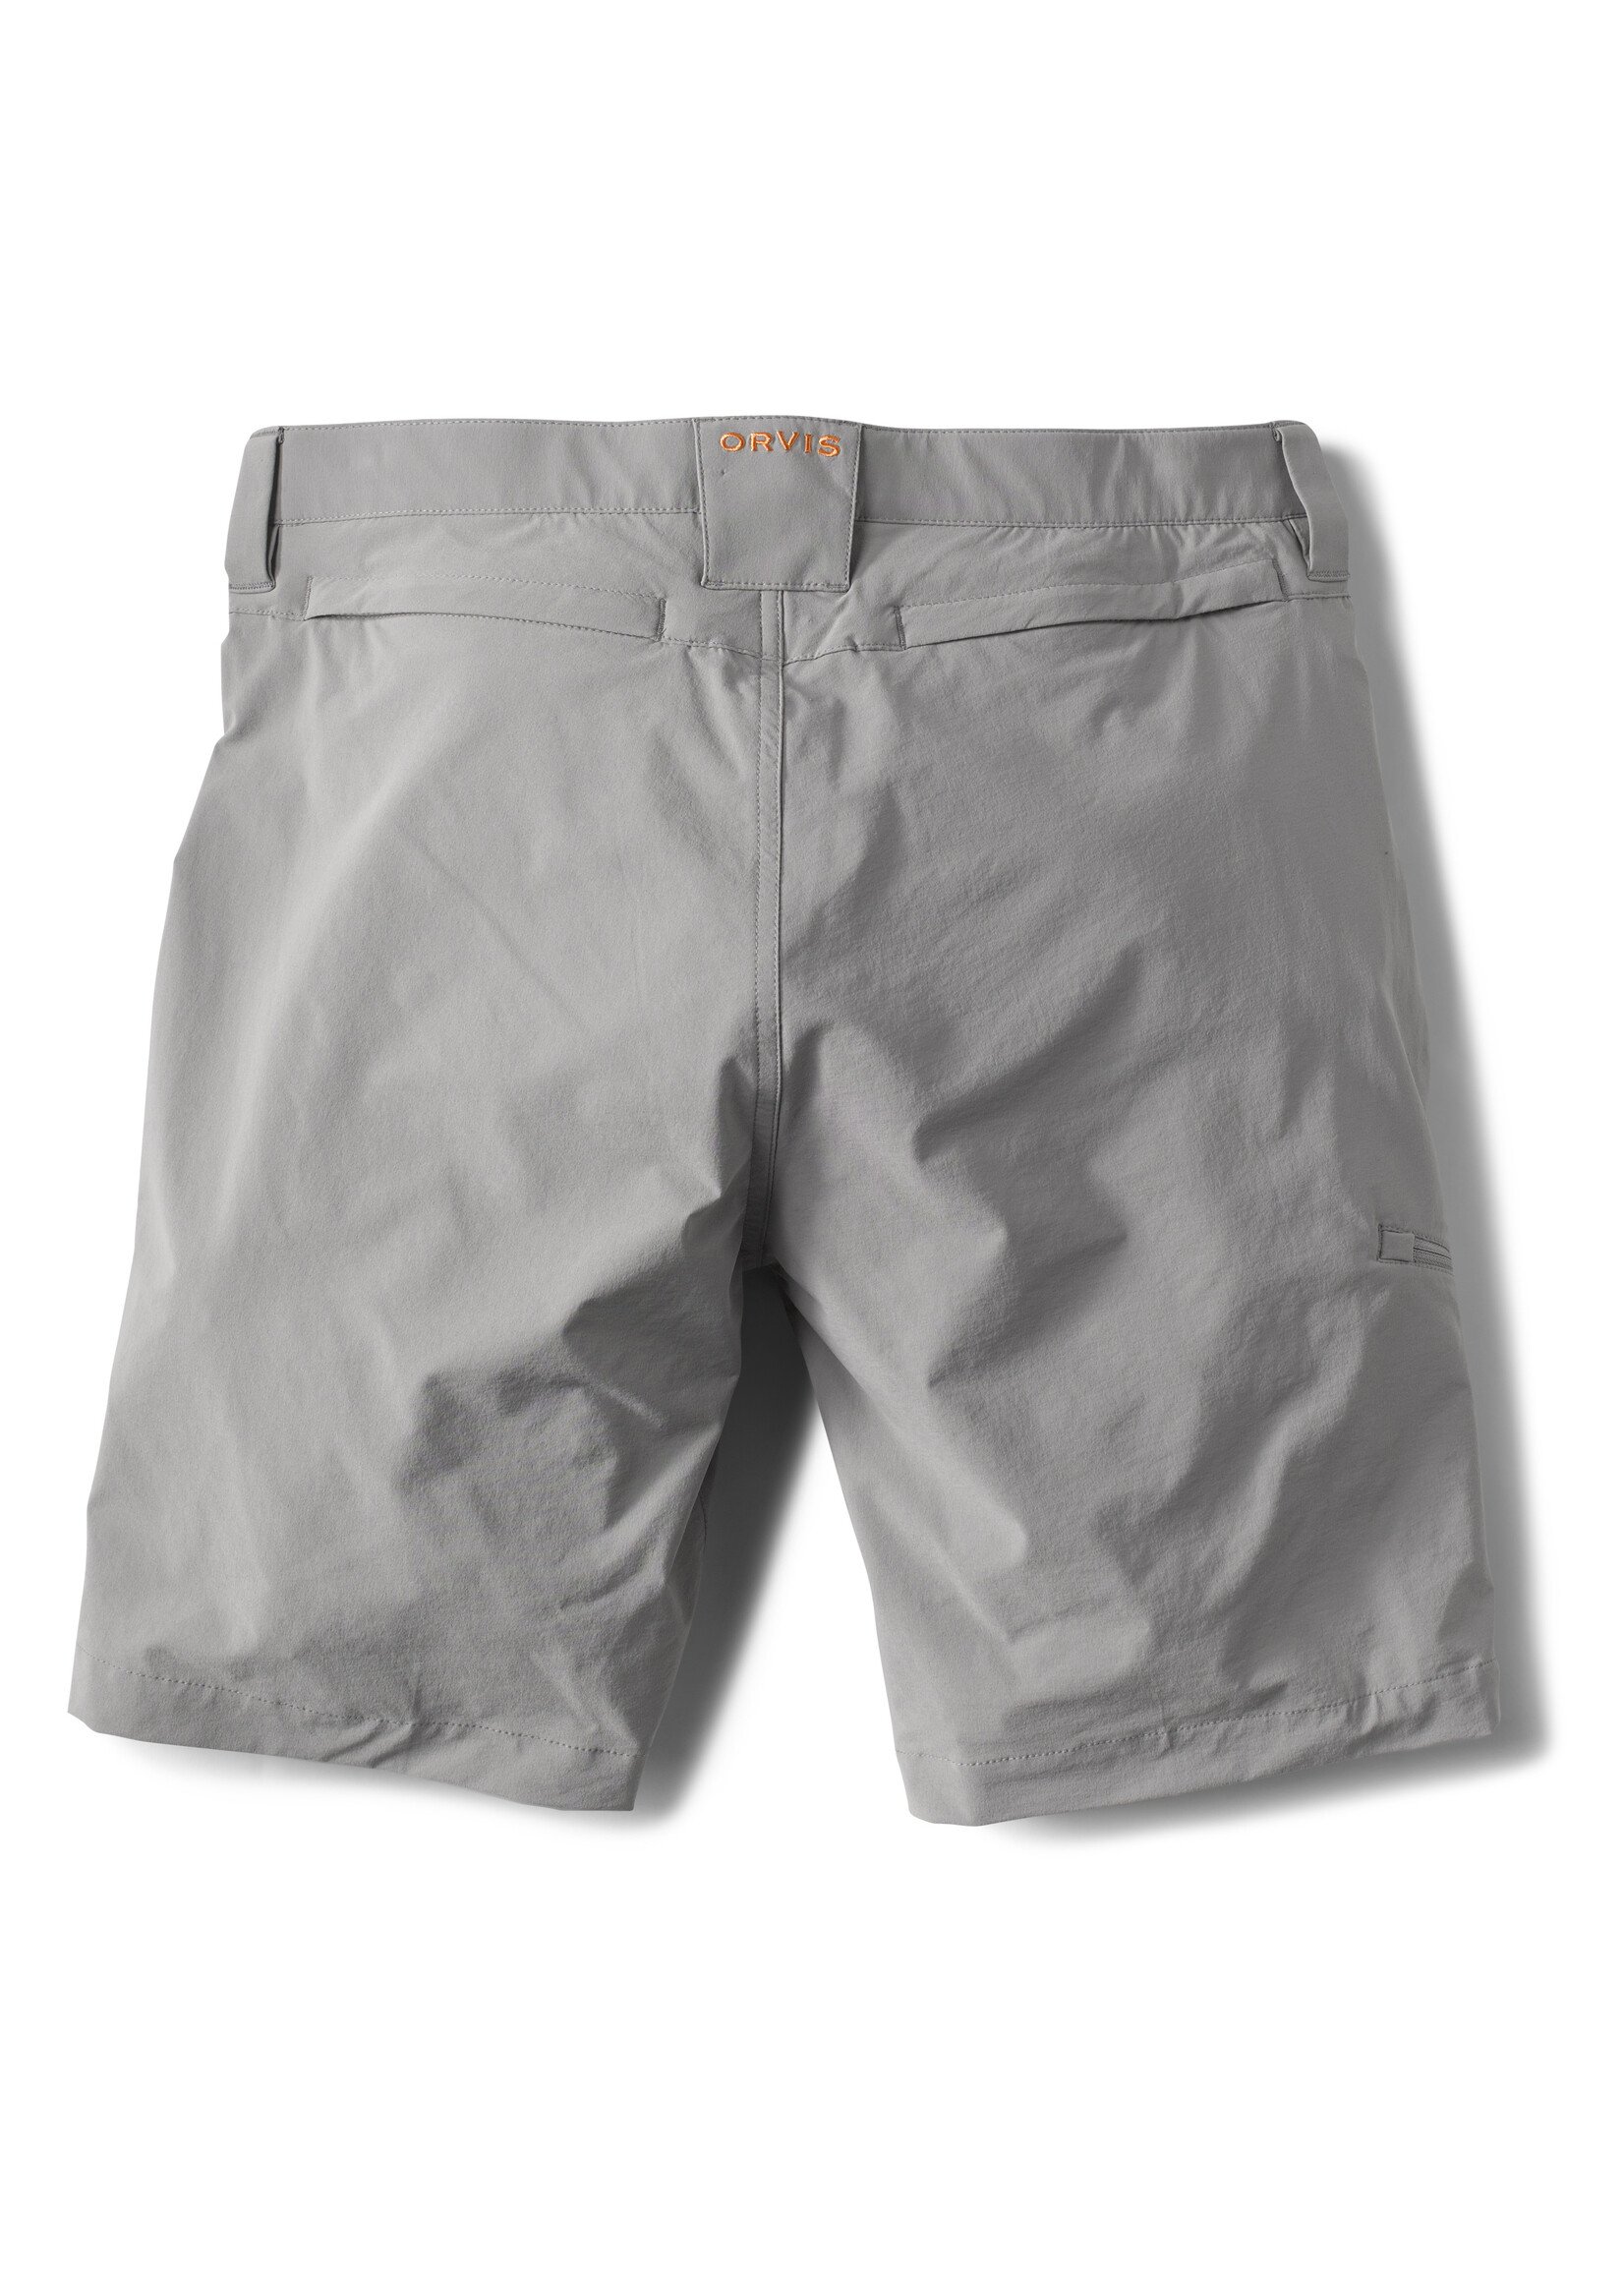 Orvis Jackson Quick Dry Shorts